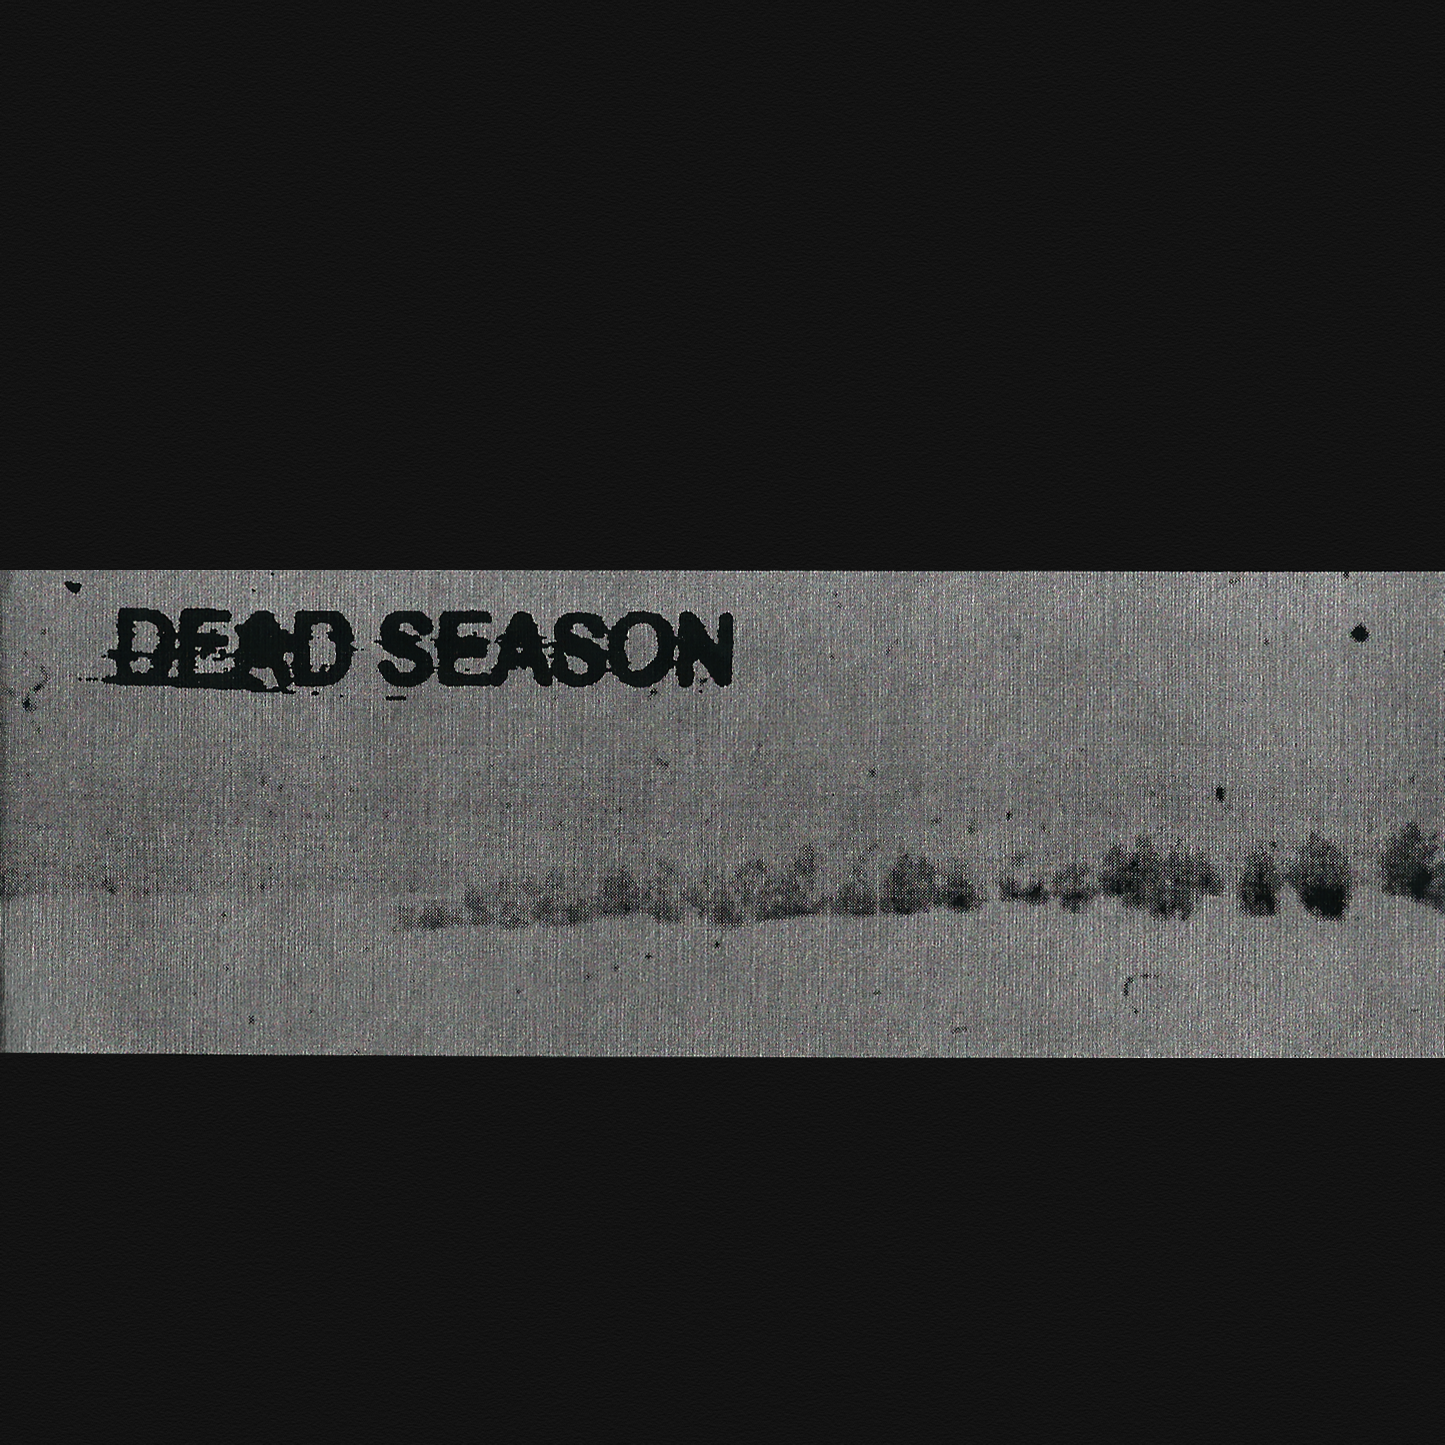 Dead Season 7" EP, Salinger Press Records, February 1999